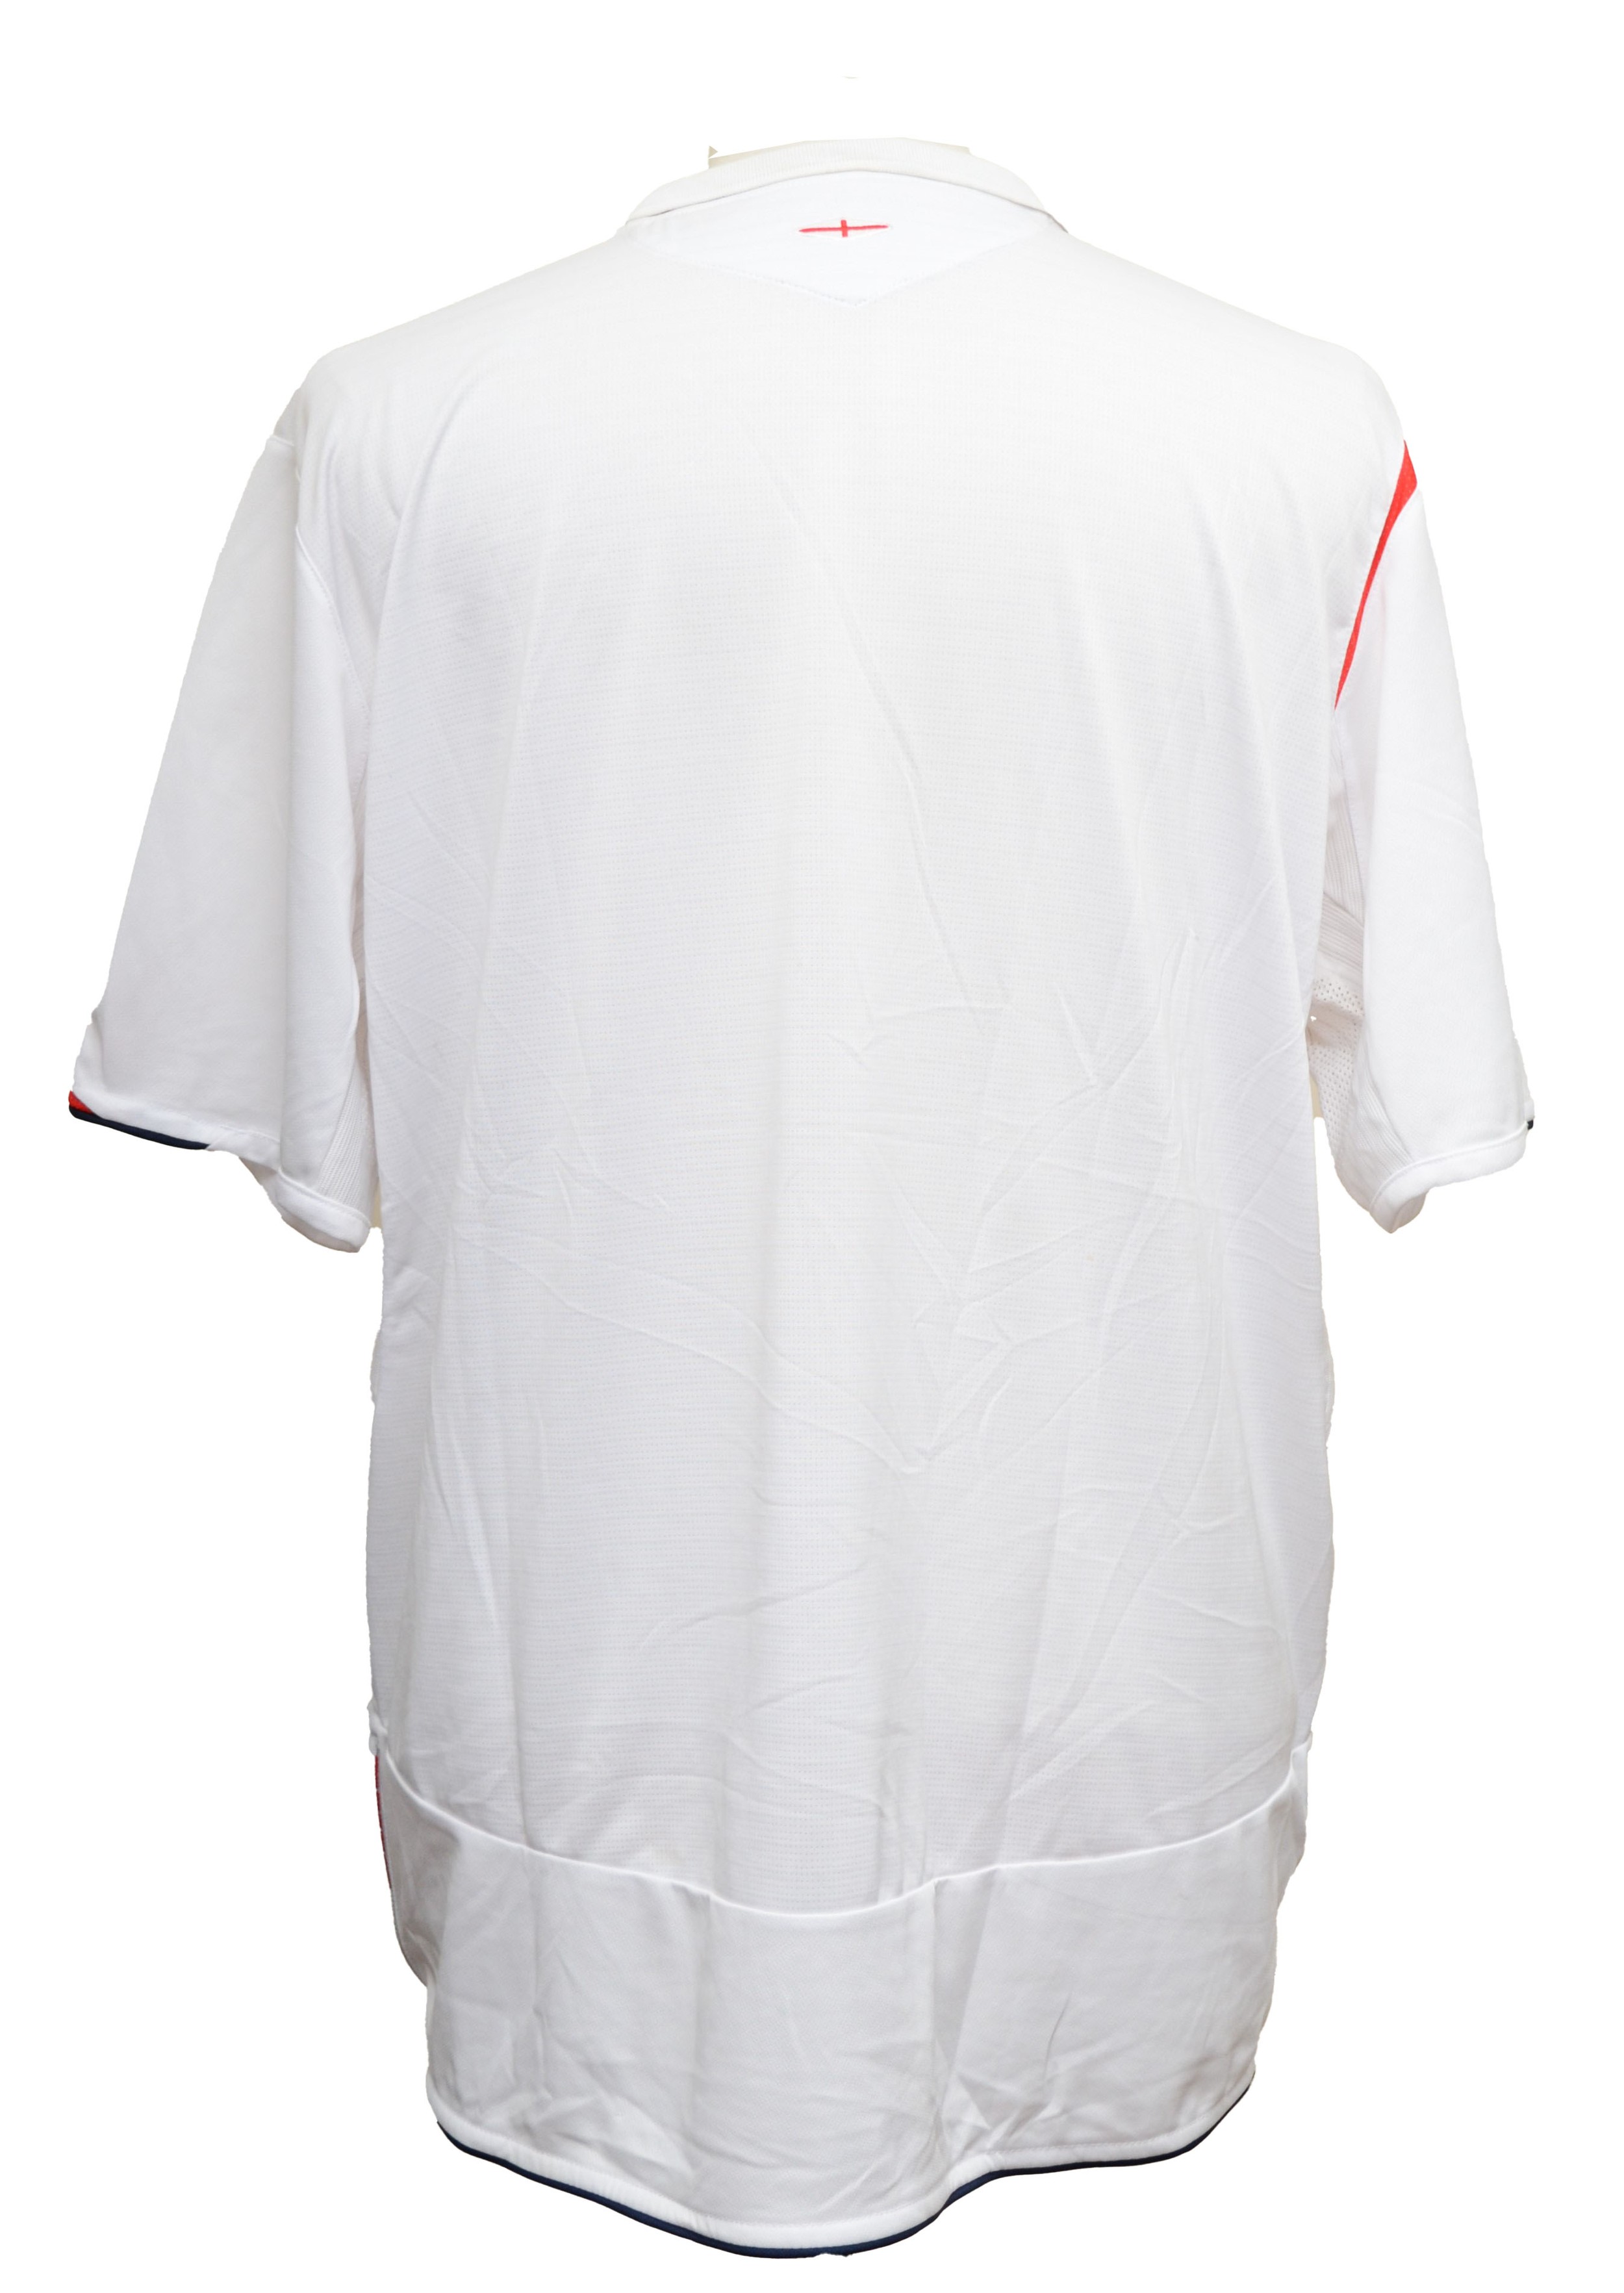 Signed England shirt 2006 XXL Includes; Steven Gerrard Frank Lampard John Terry Rio Ferdinand - Image 5 of 5